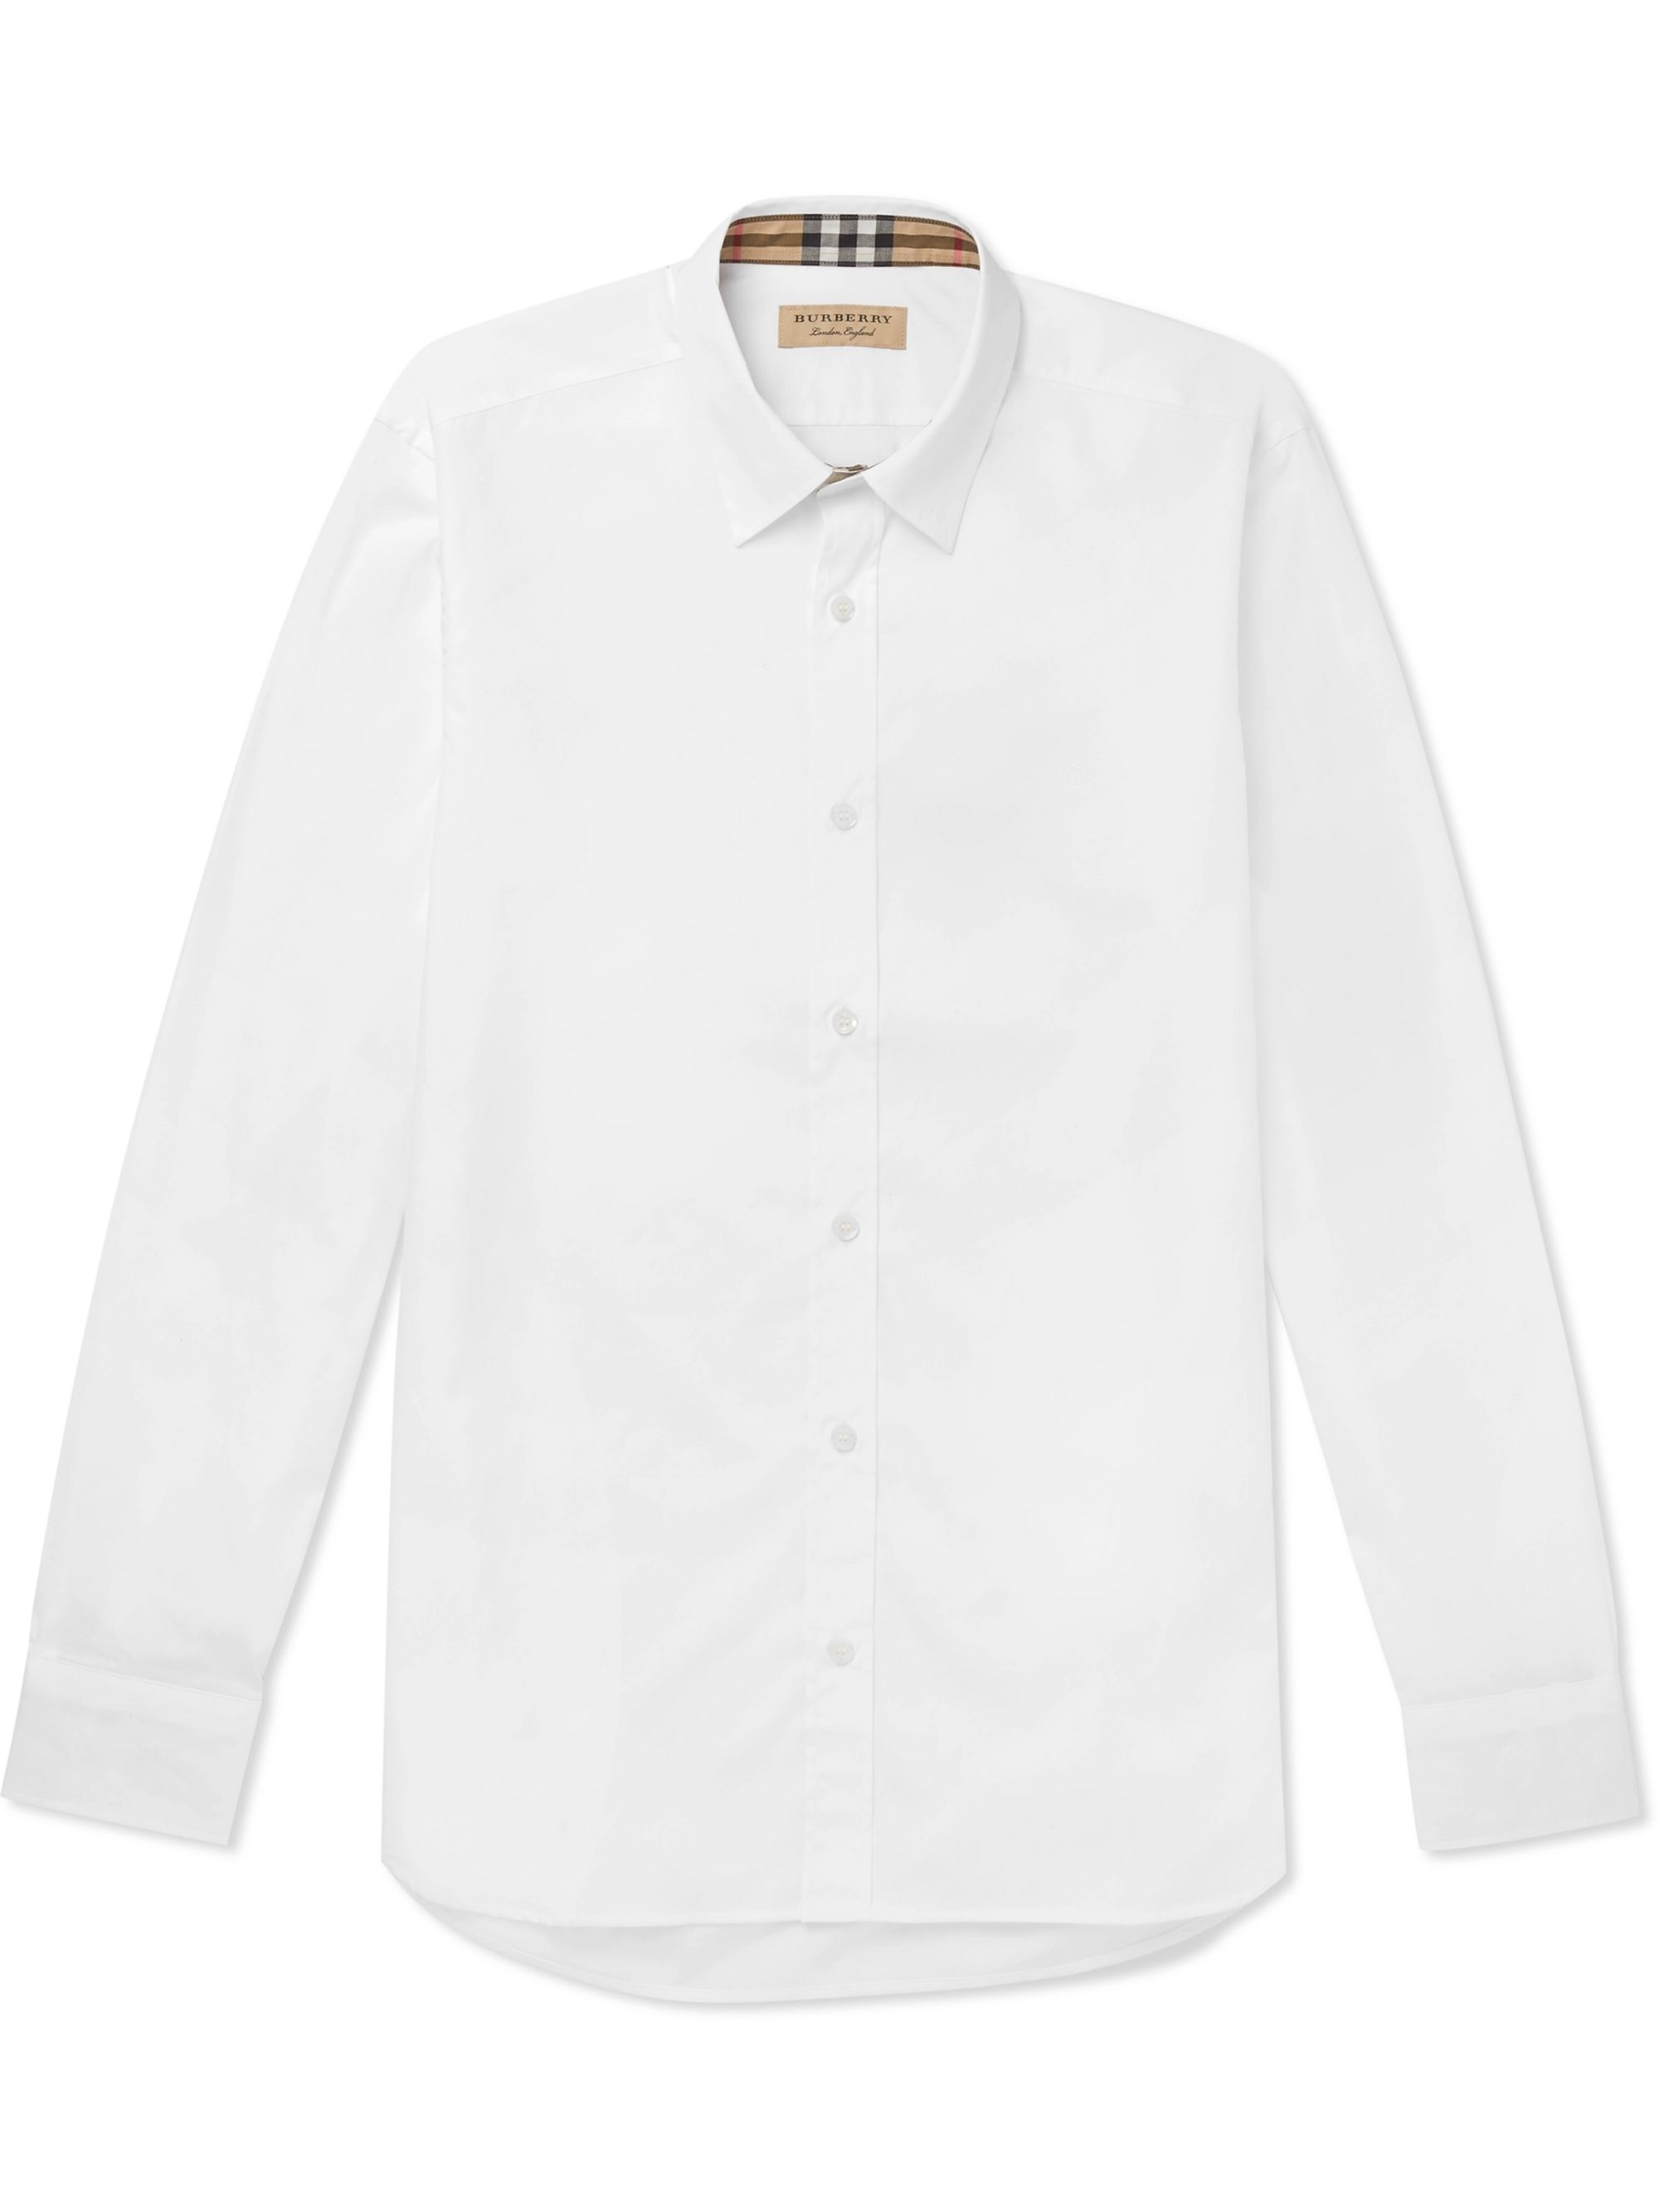 burberry shirt white